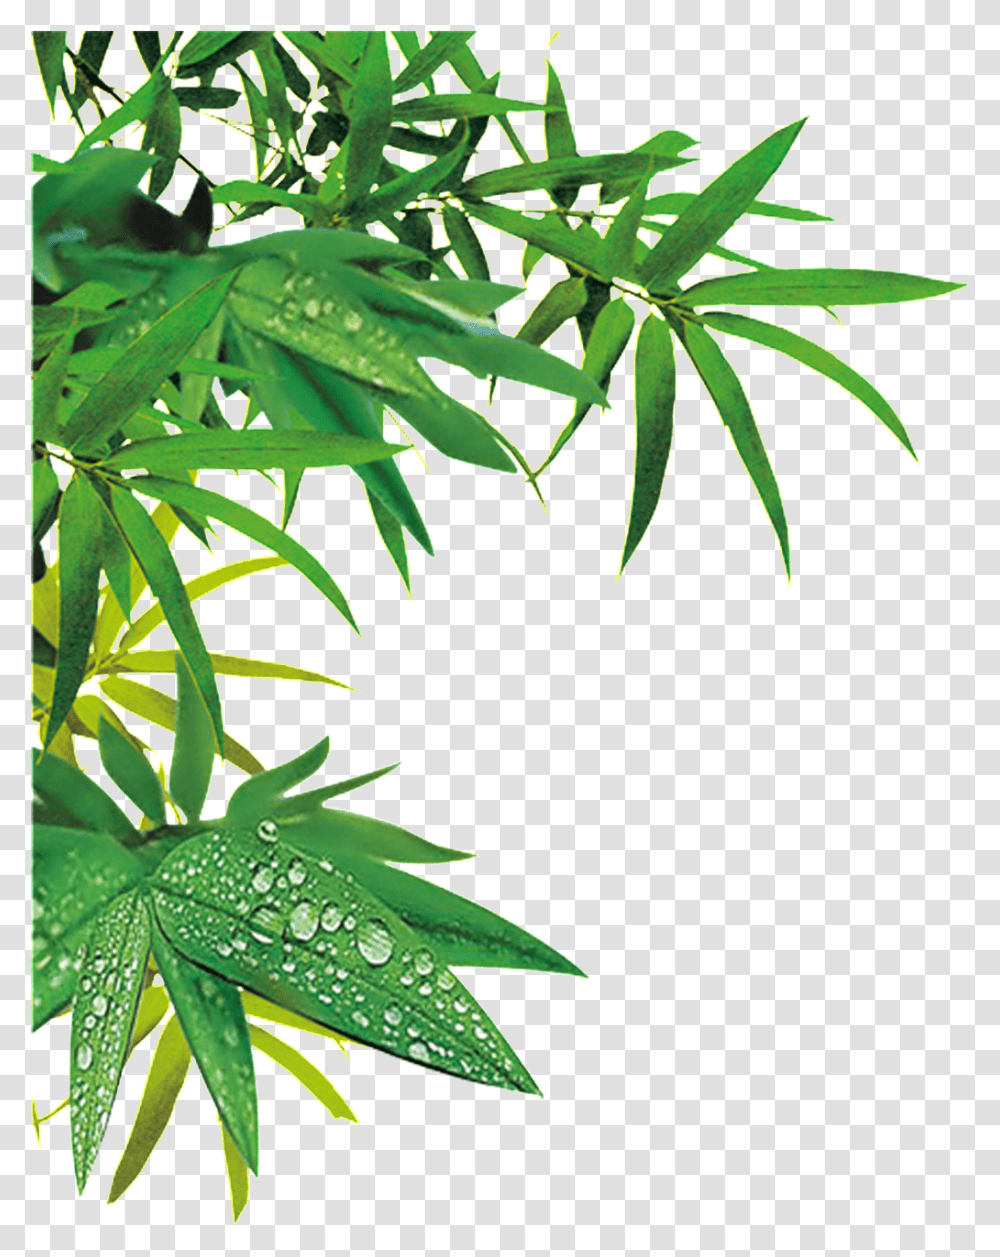 Hnh V L Trc Clipart Download Bamboo Forest Bamboo Tree Cartoon, Leaf, Plant, Vegetation, Hemp Transparent Png